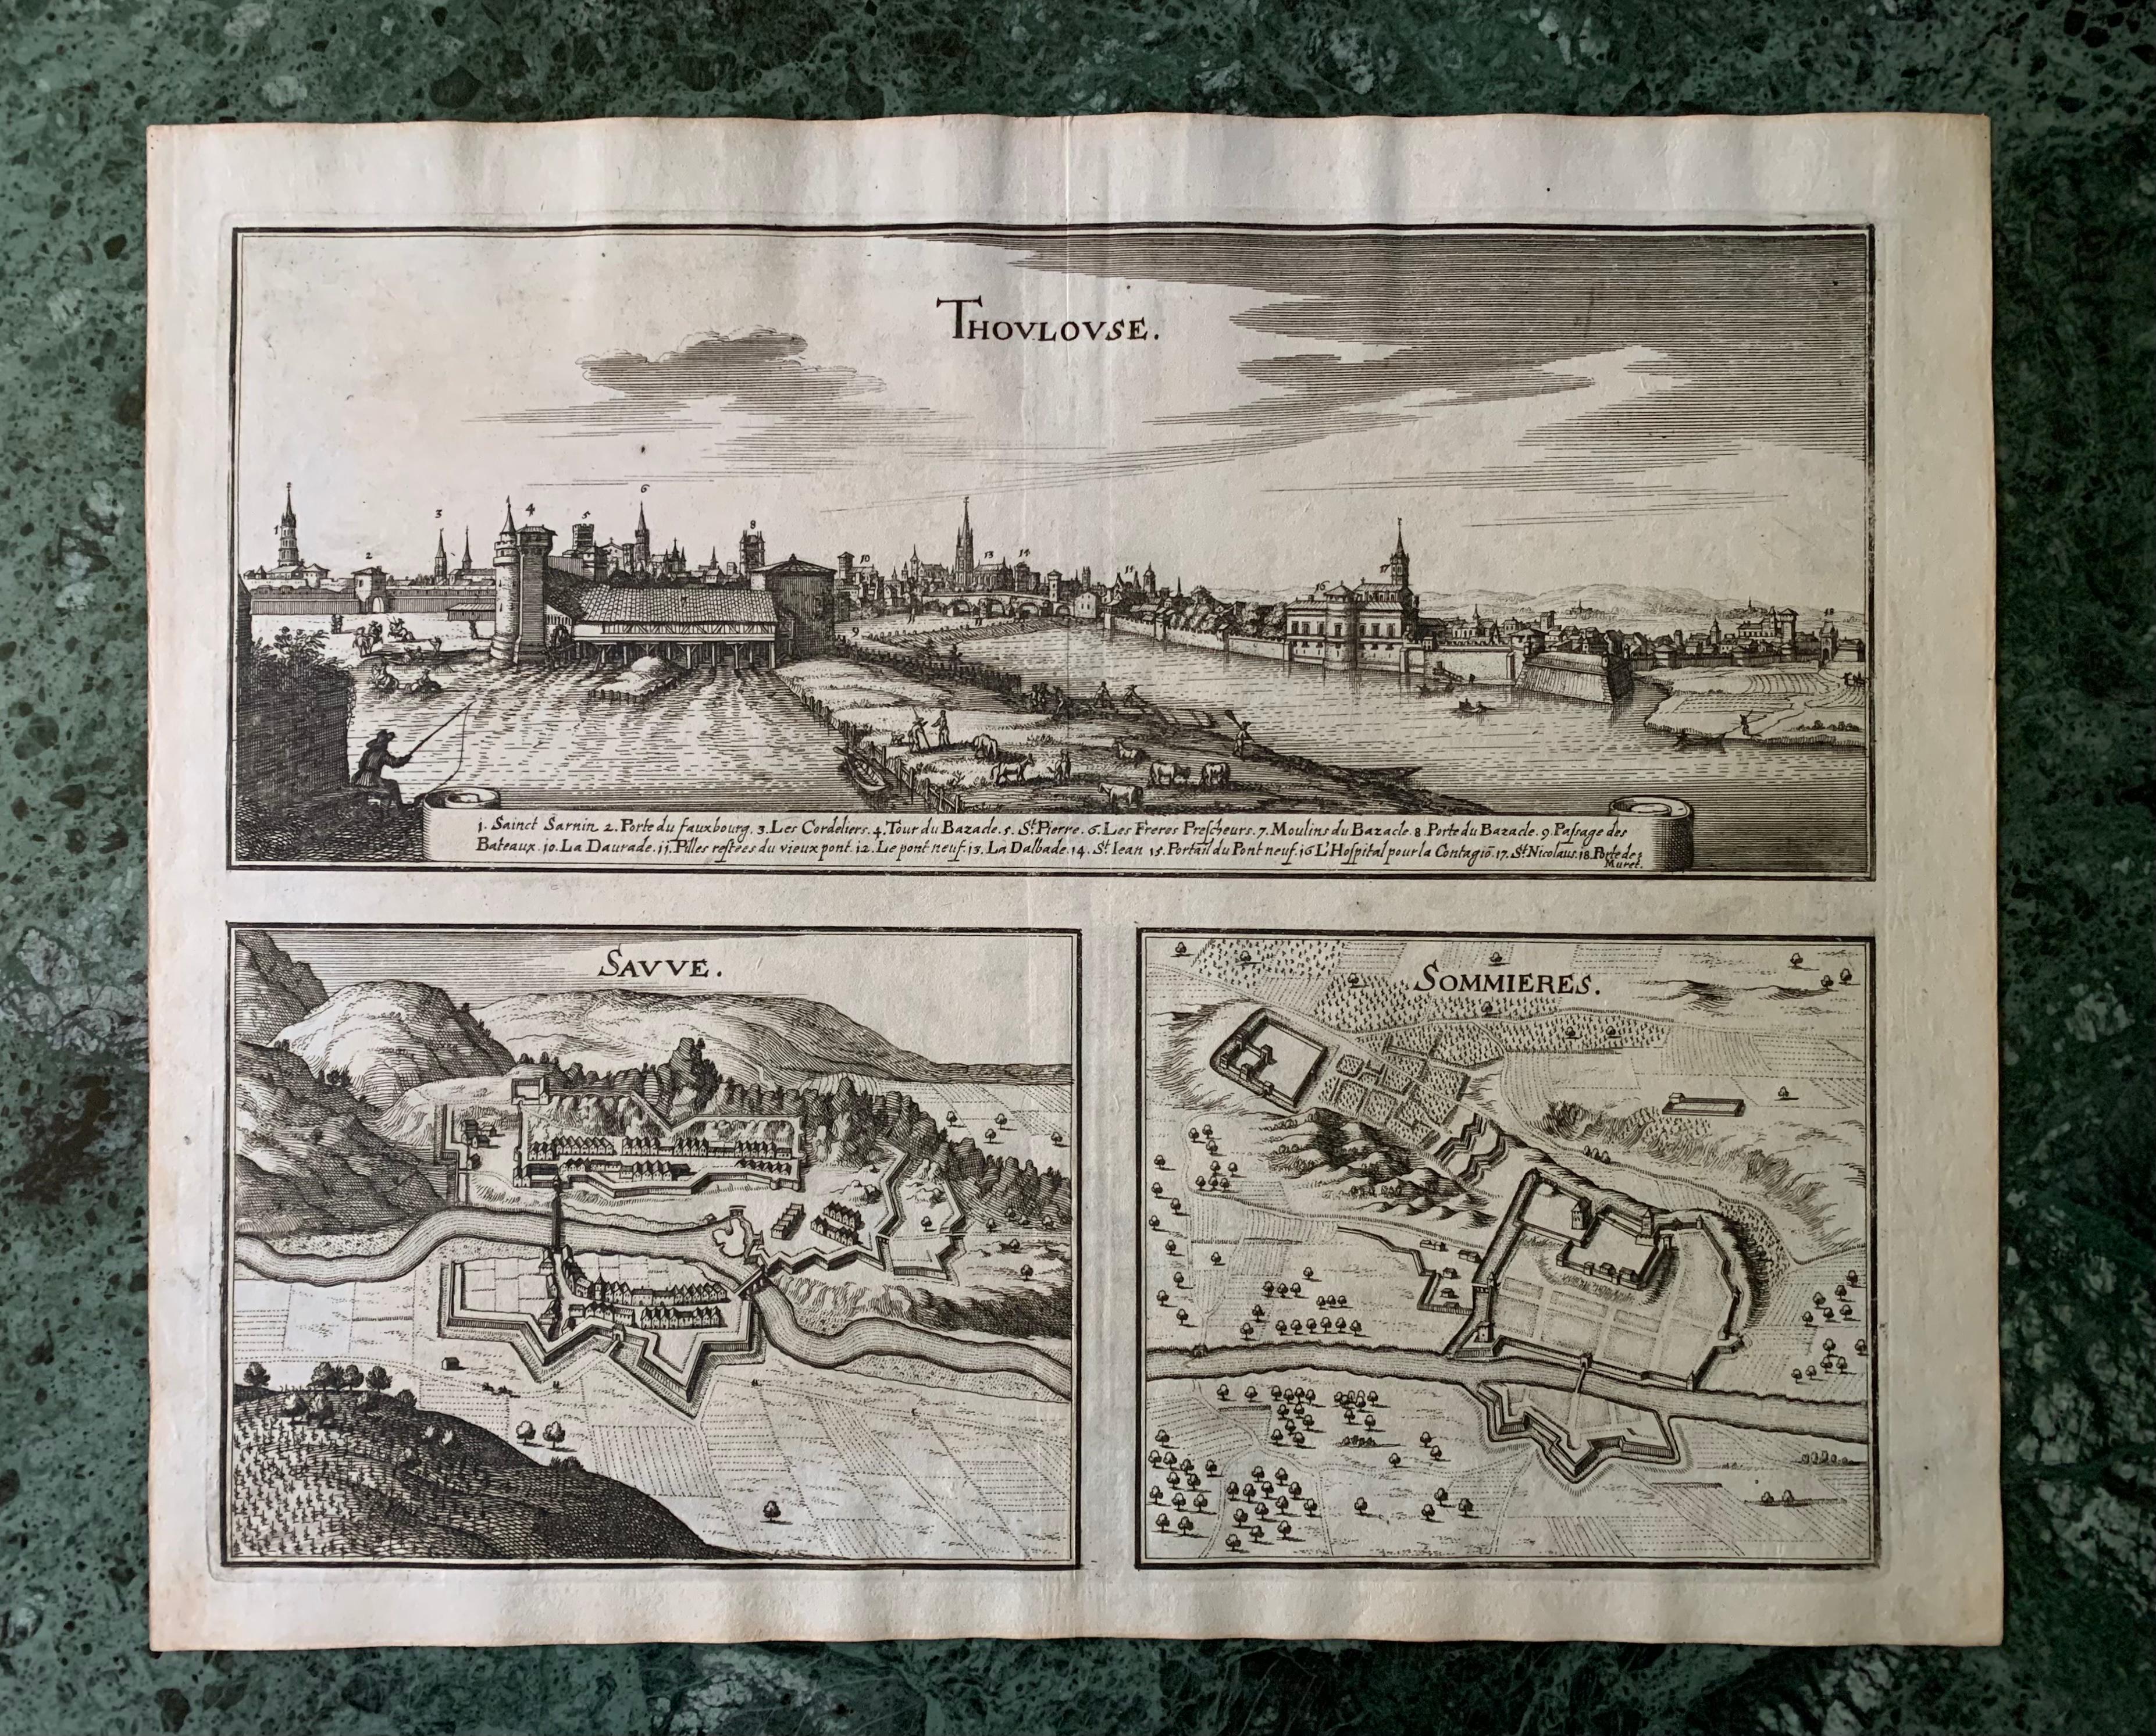 Toulouse, Savve, Sommieres, topografische Karte von Iohan Peeters, 17. Jahrhundert im Angebot 2